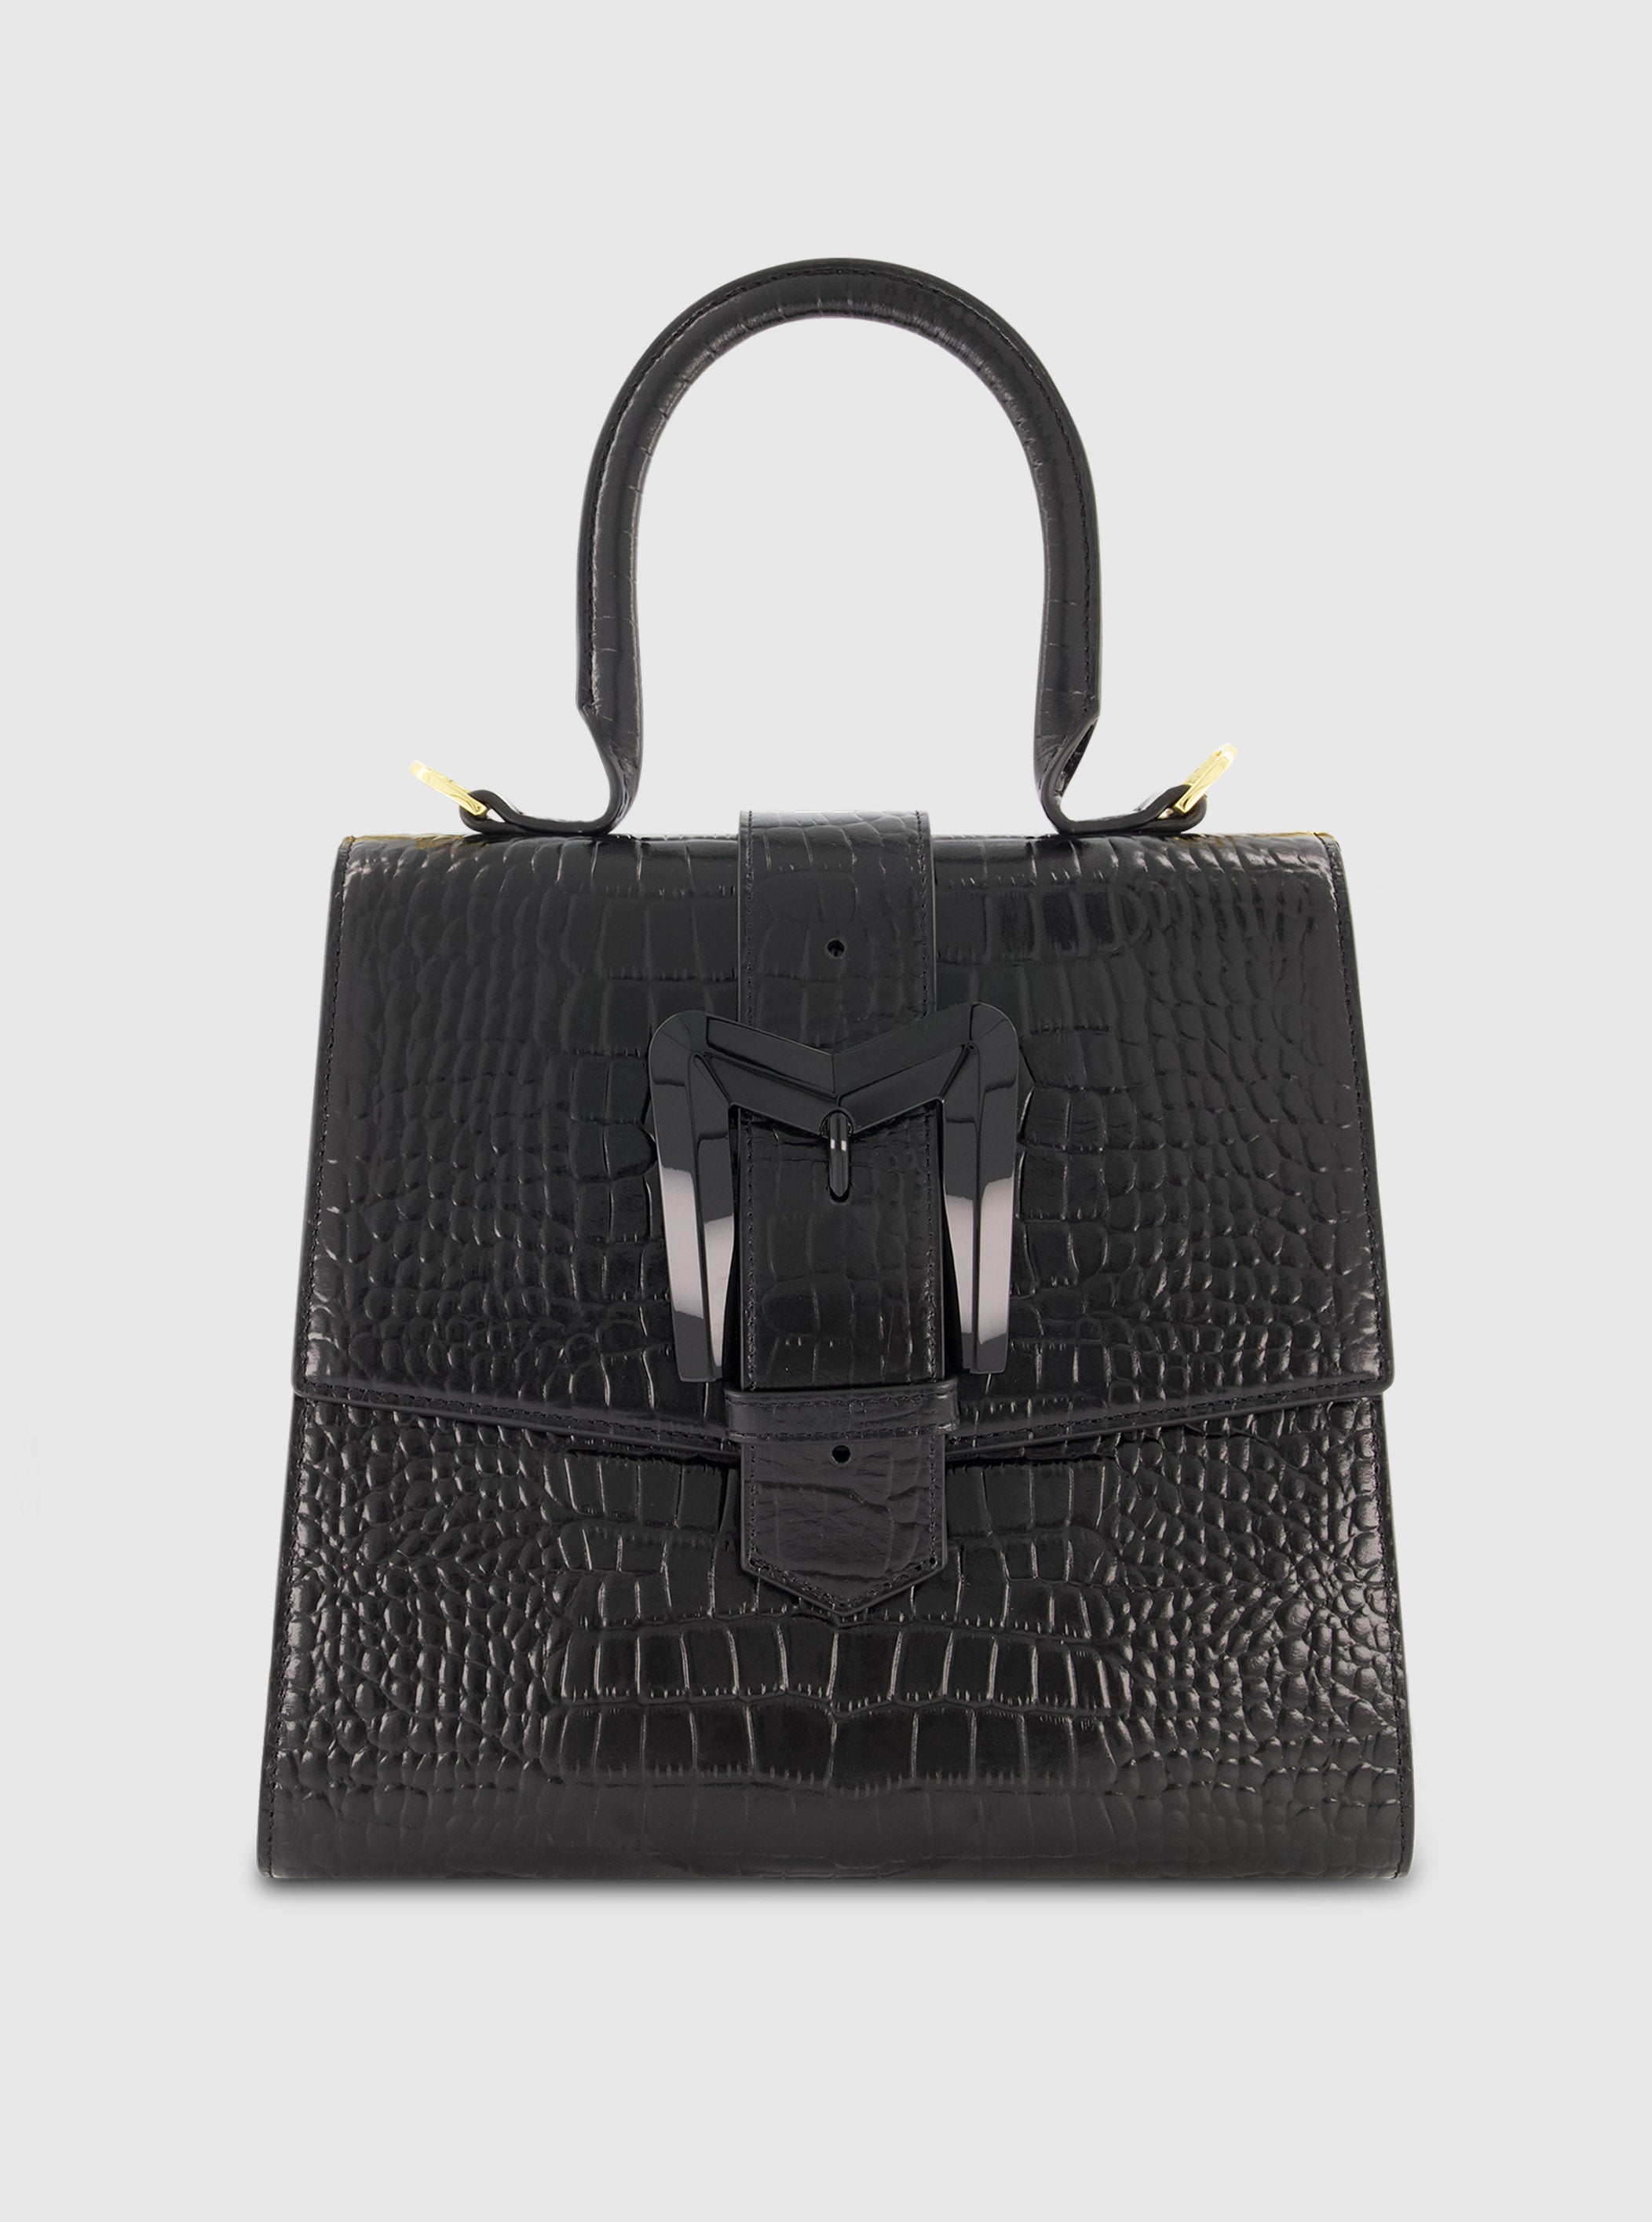 Buckled Medium Croco Black Leather Handbag with Detachable Strap